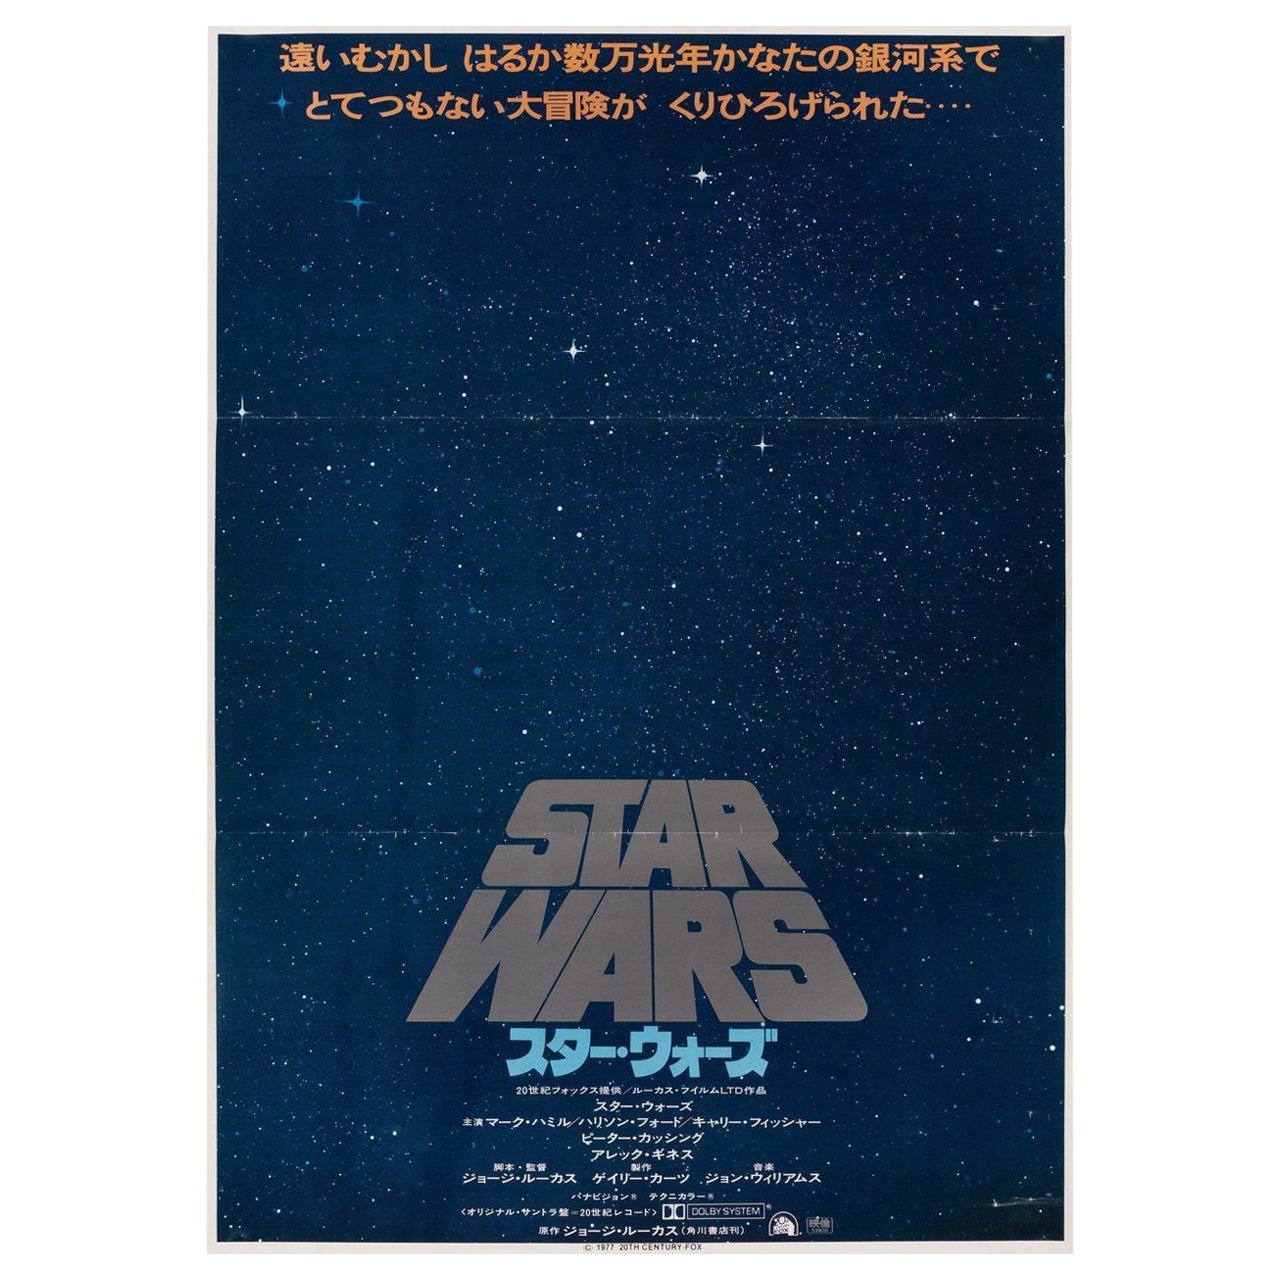 Affiche japonaise du film « Star Wars », 1977, format B2